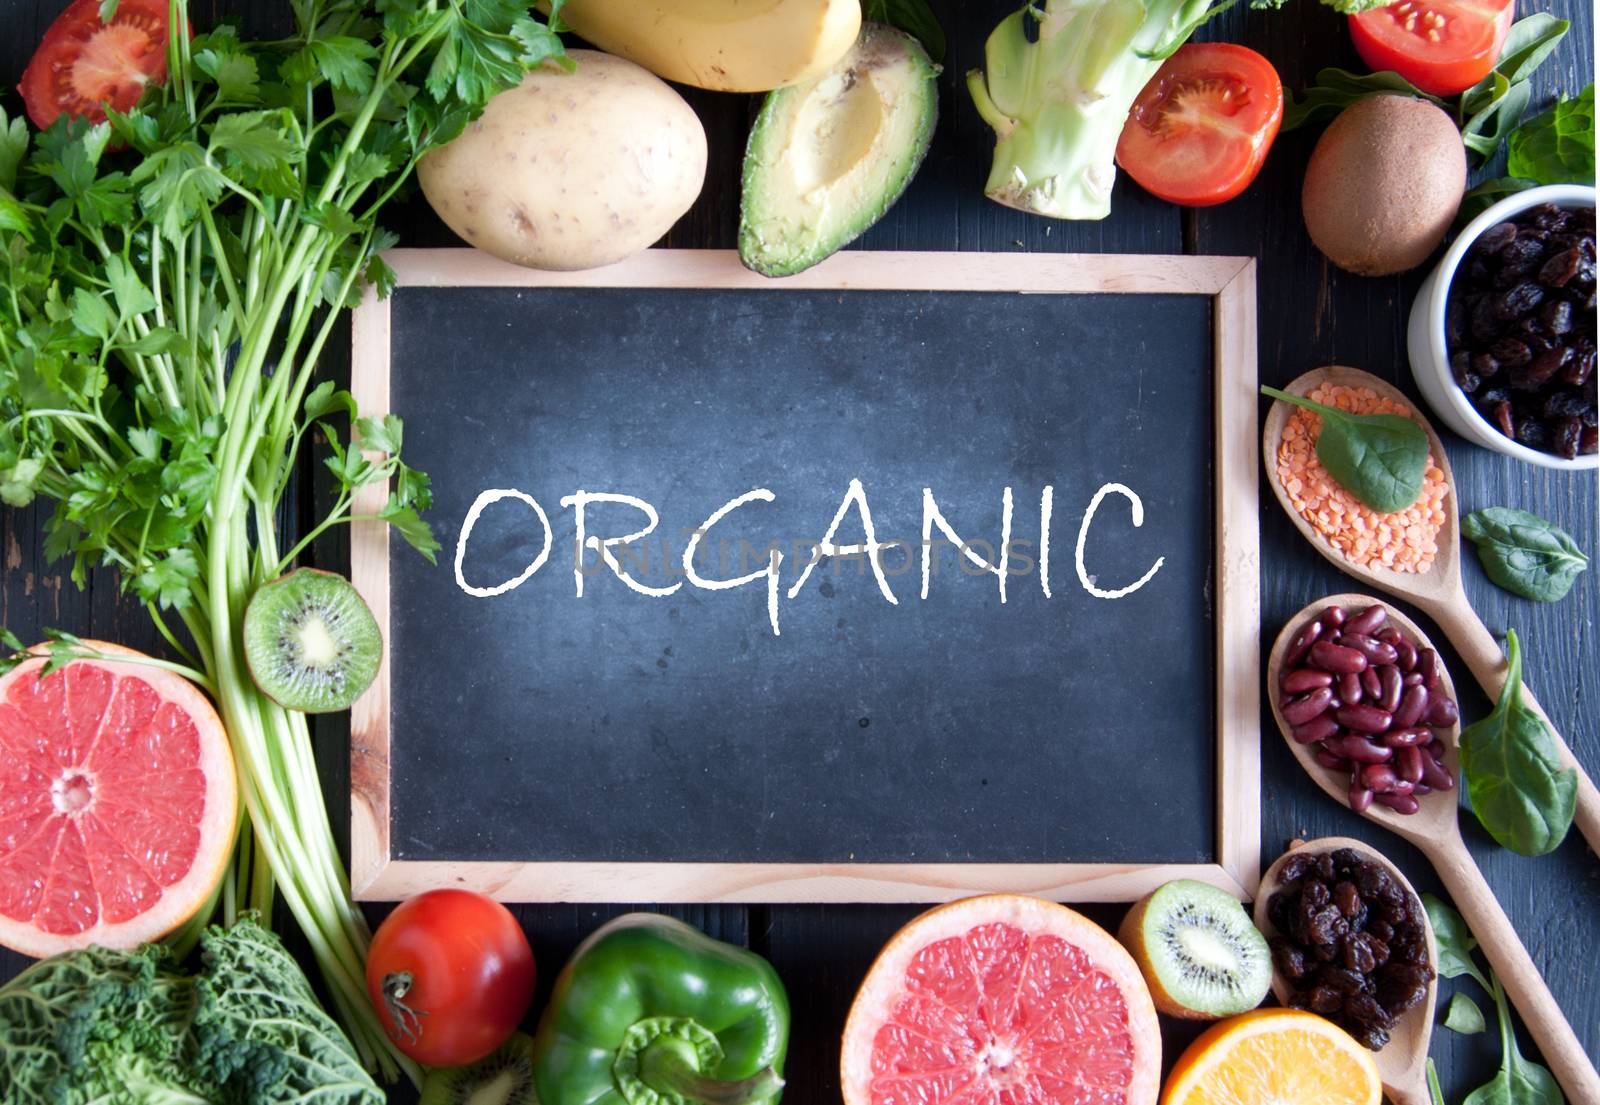 Organic food by unikpix